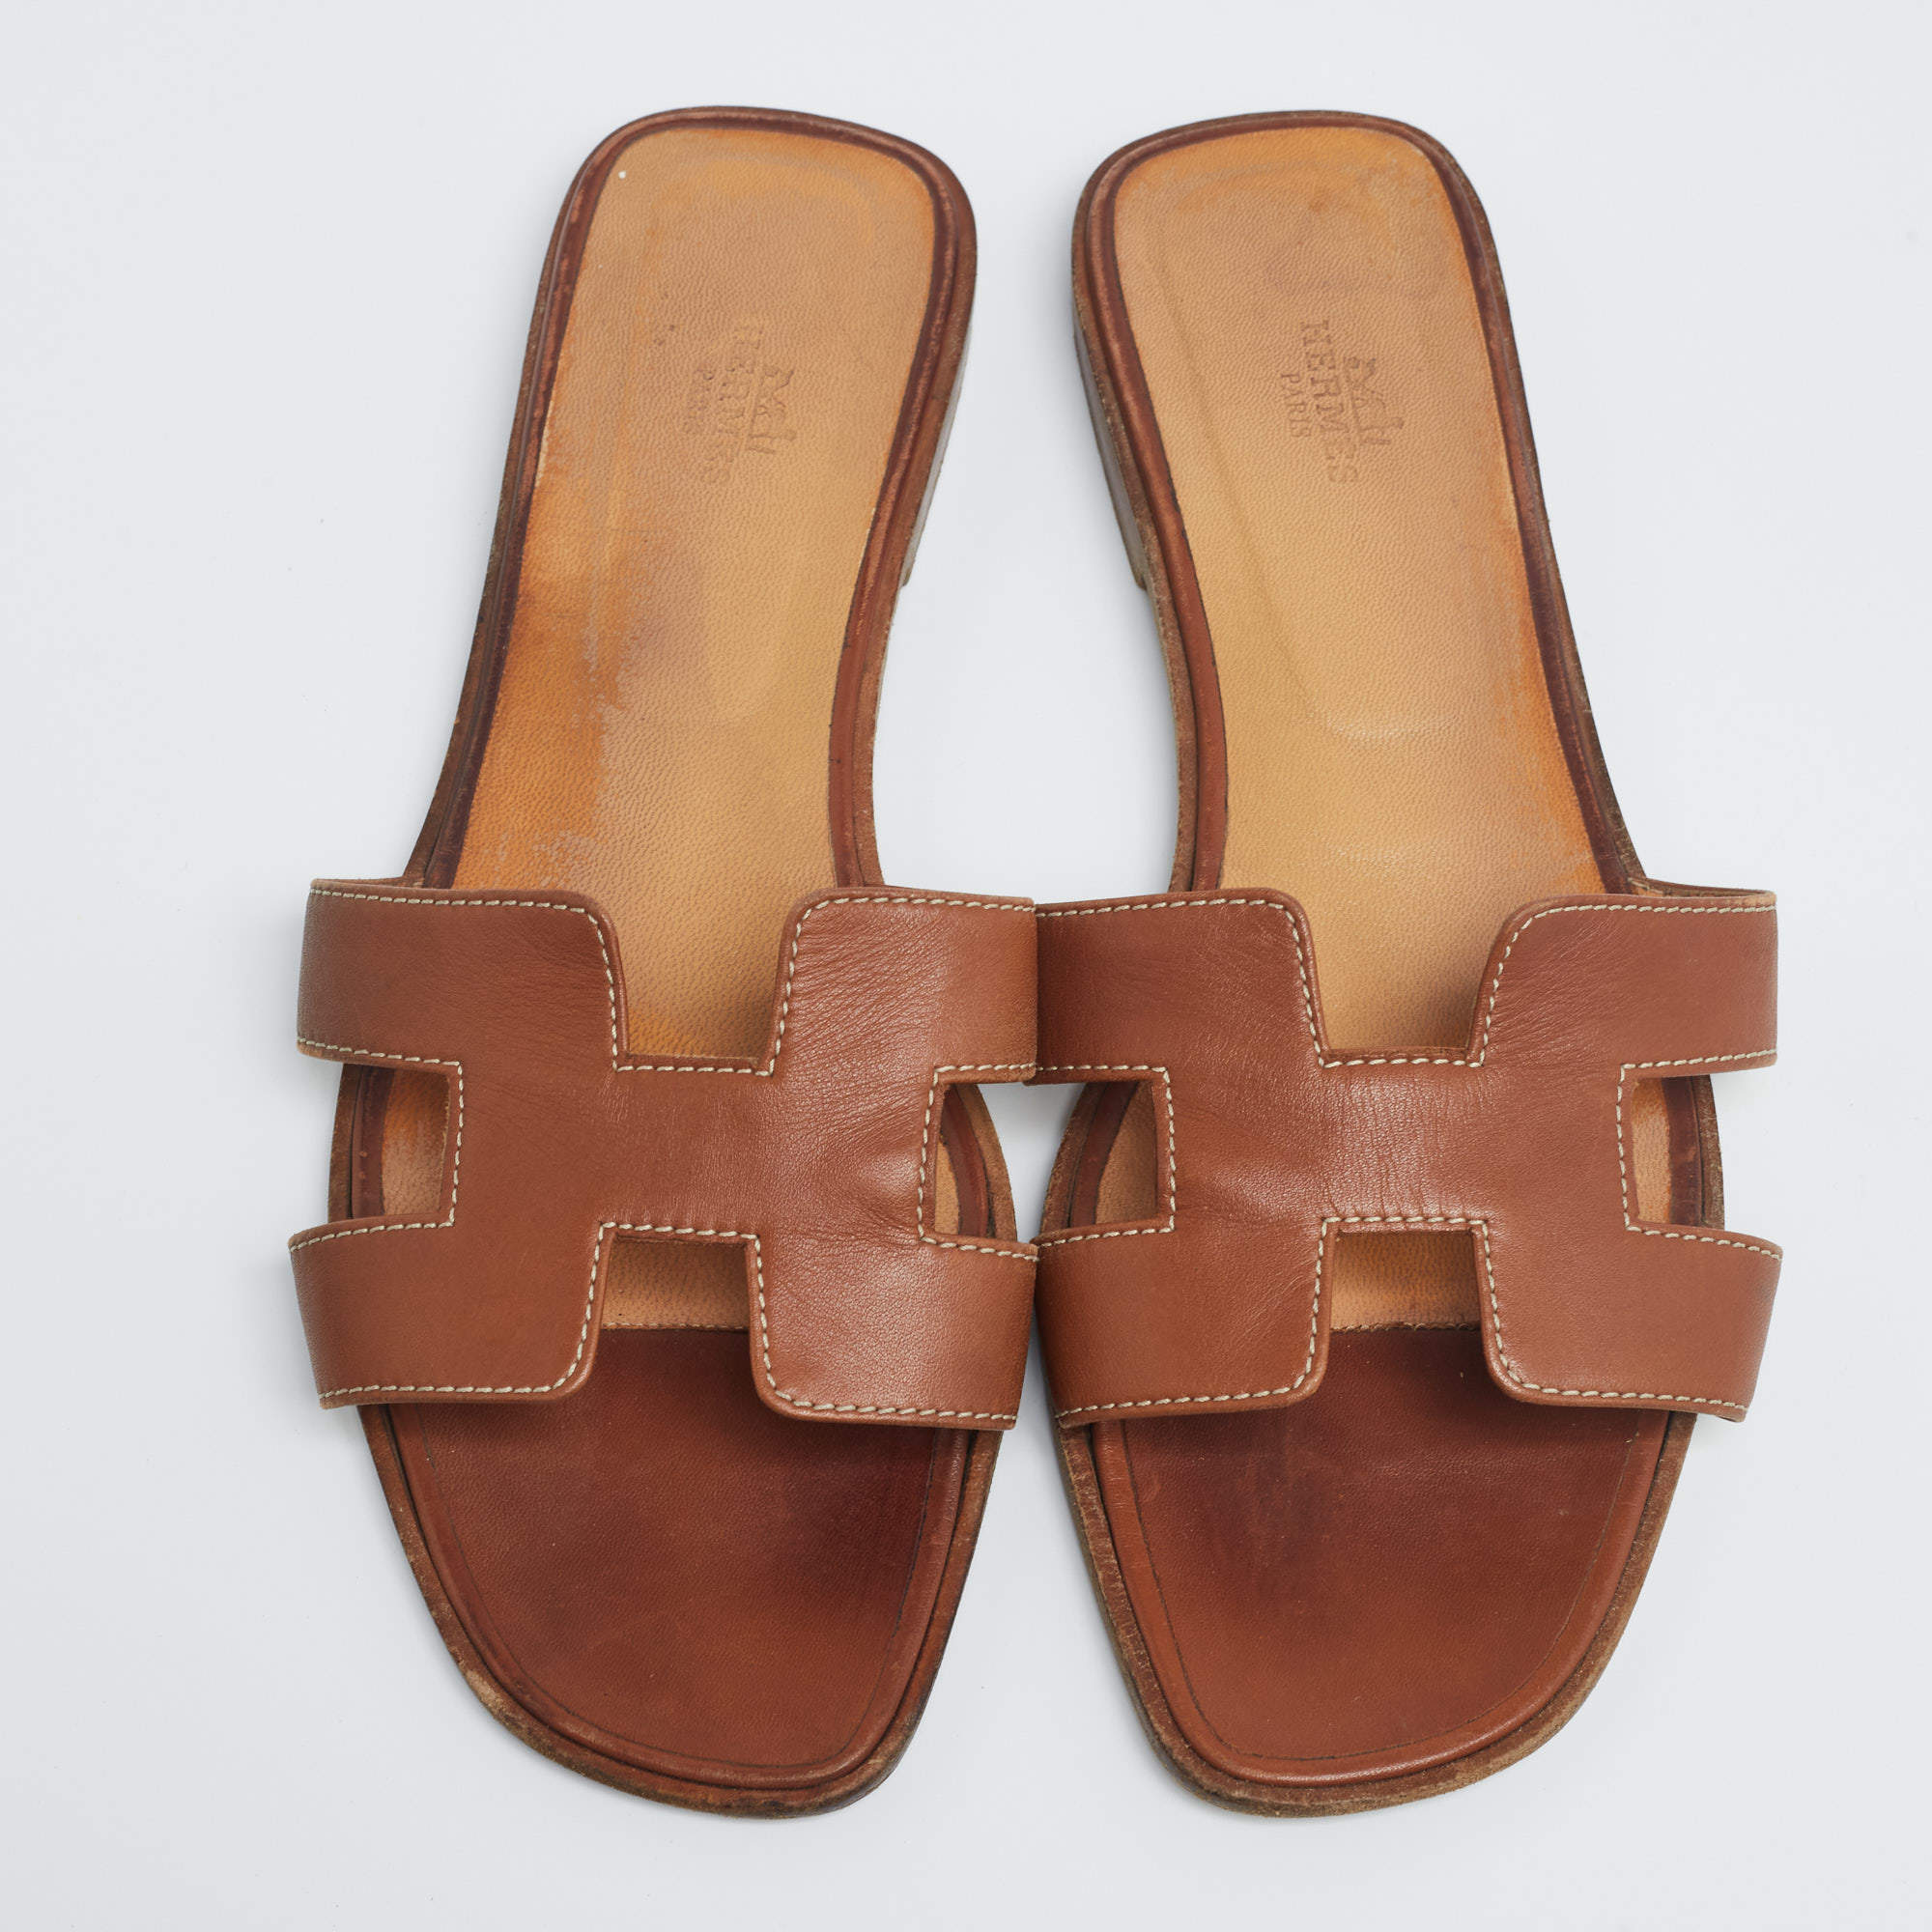 Hermes Women's Shoes | Luxury Designer Sandals | Mightychic